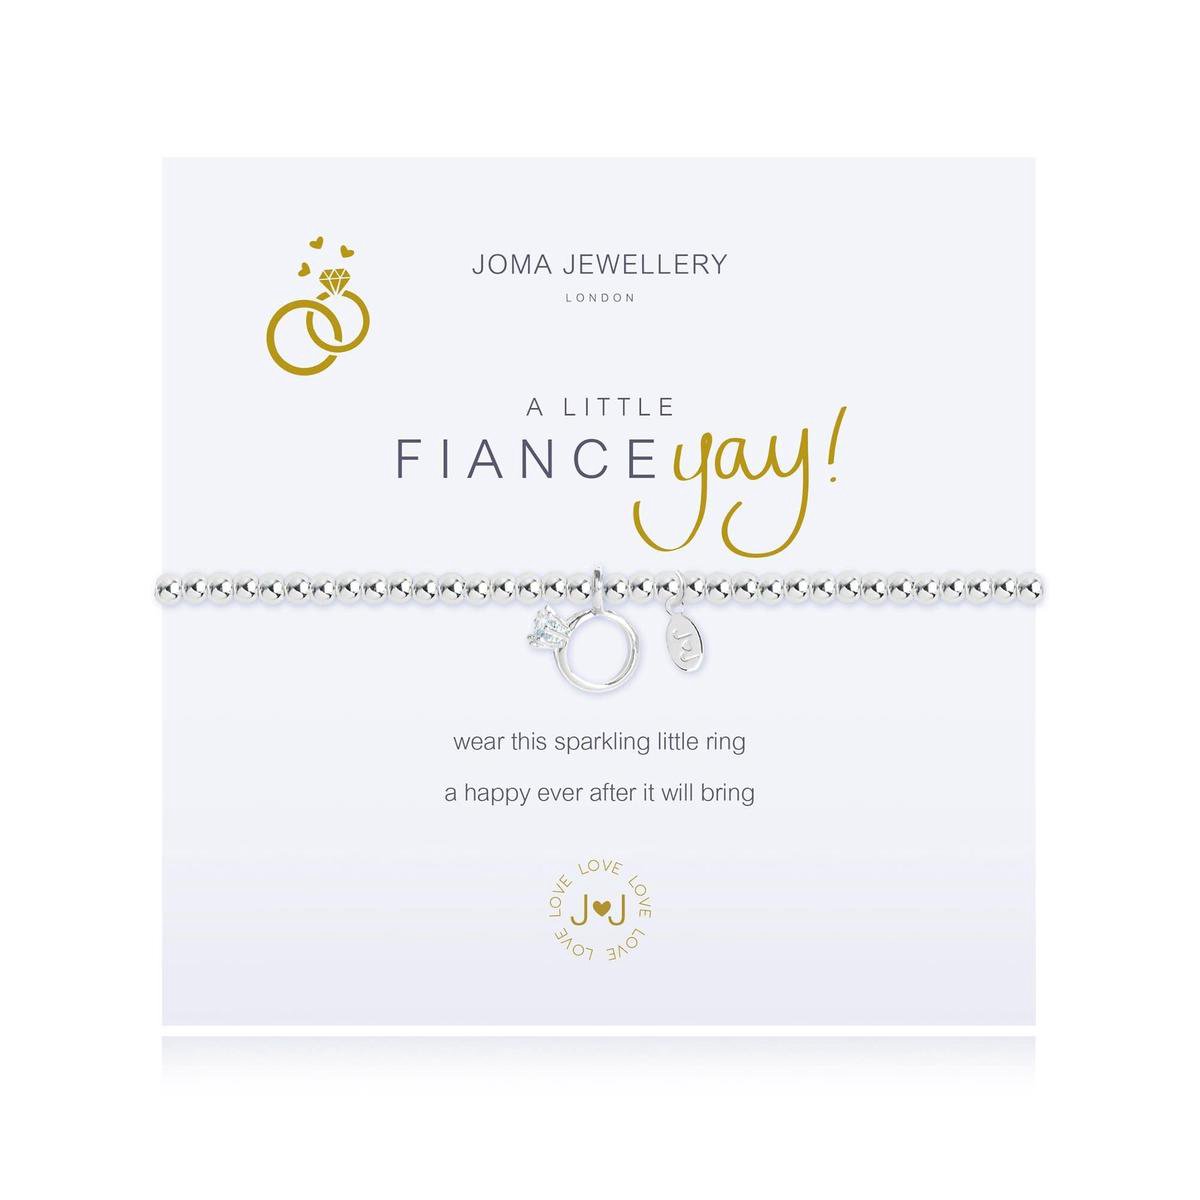 Joma Jewellery A Little - Fiance-Yay!